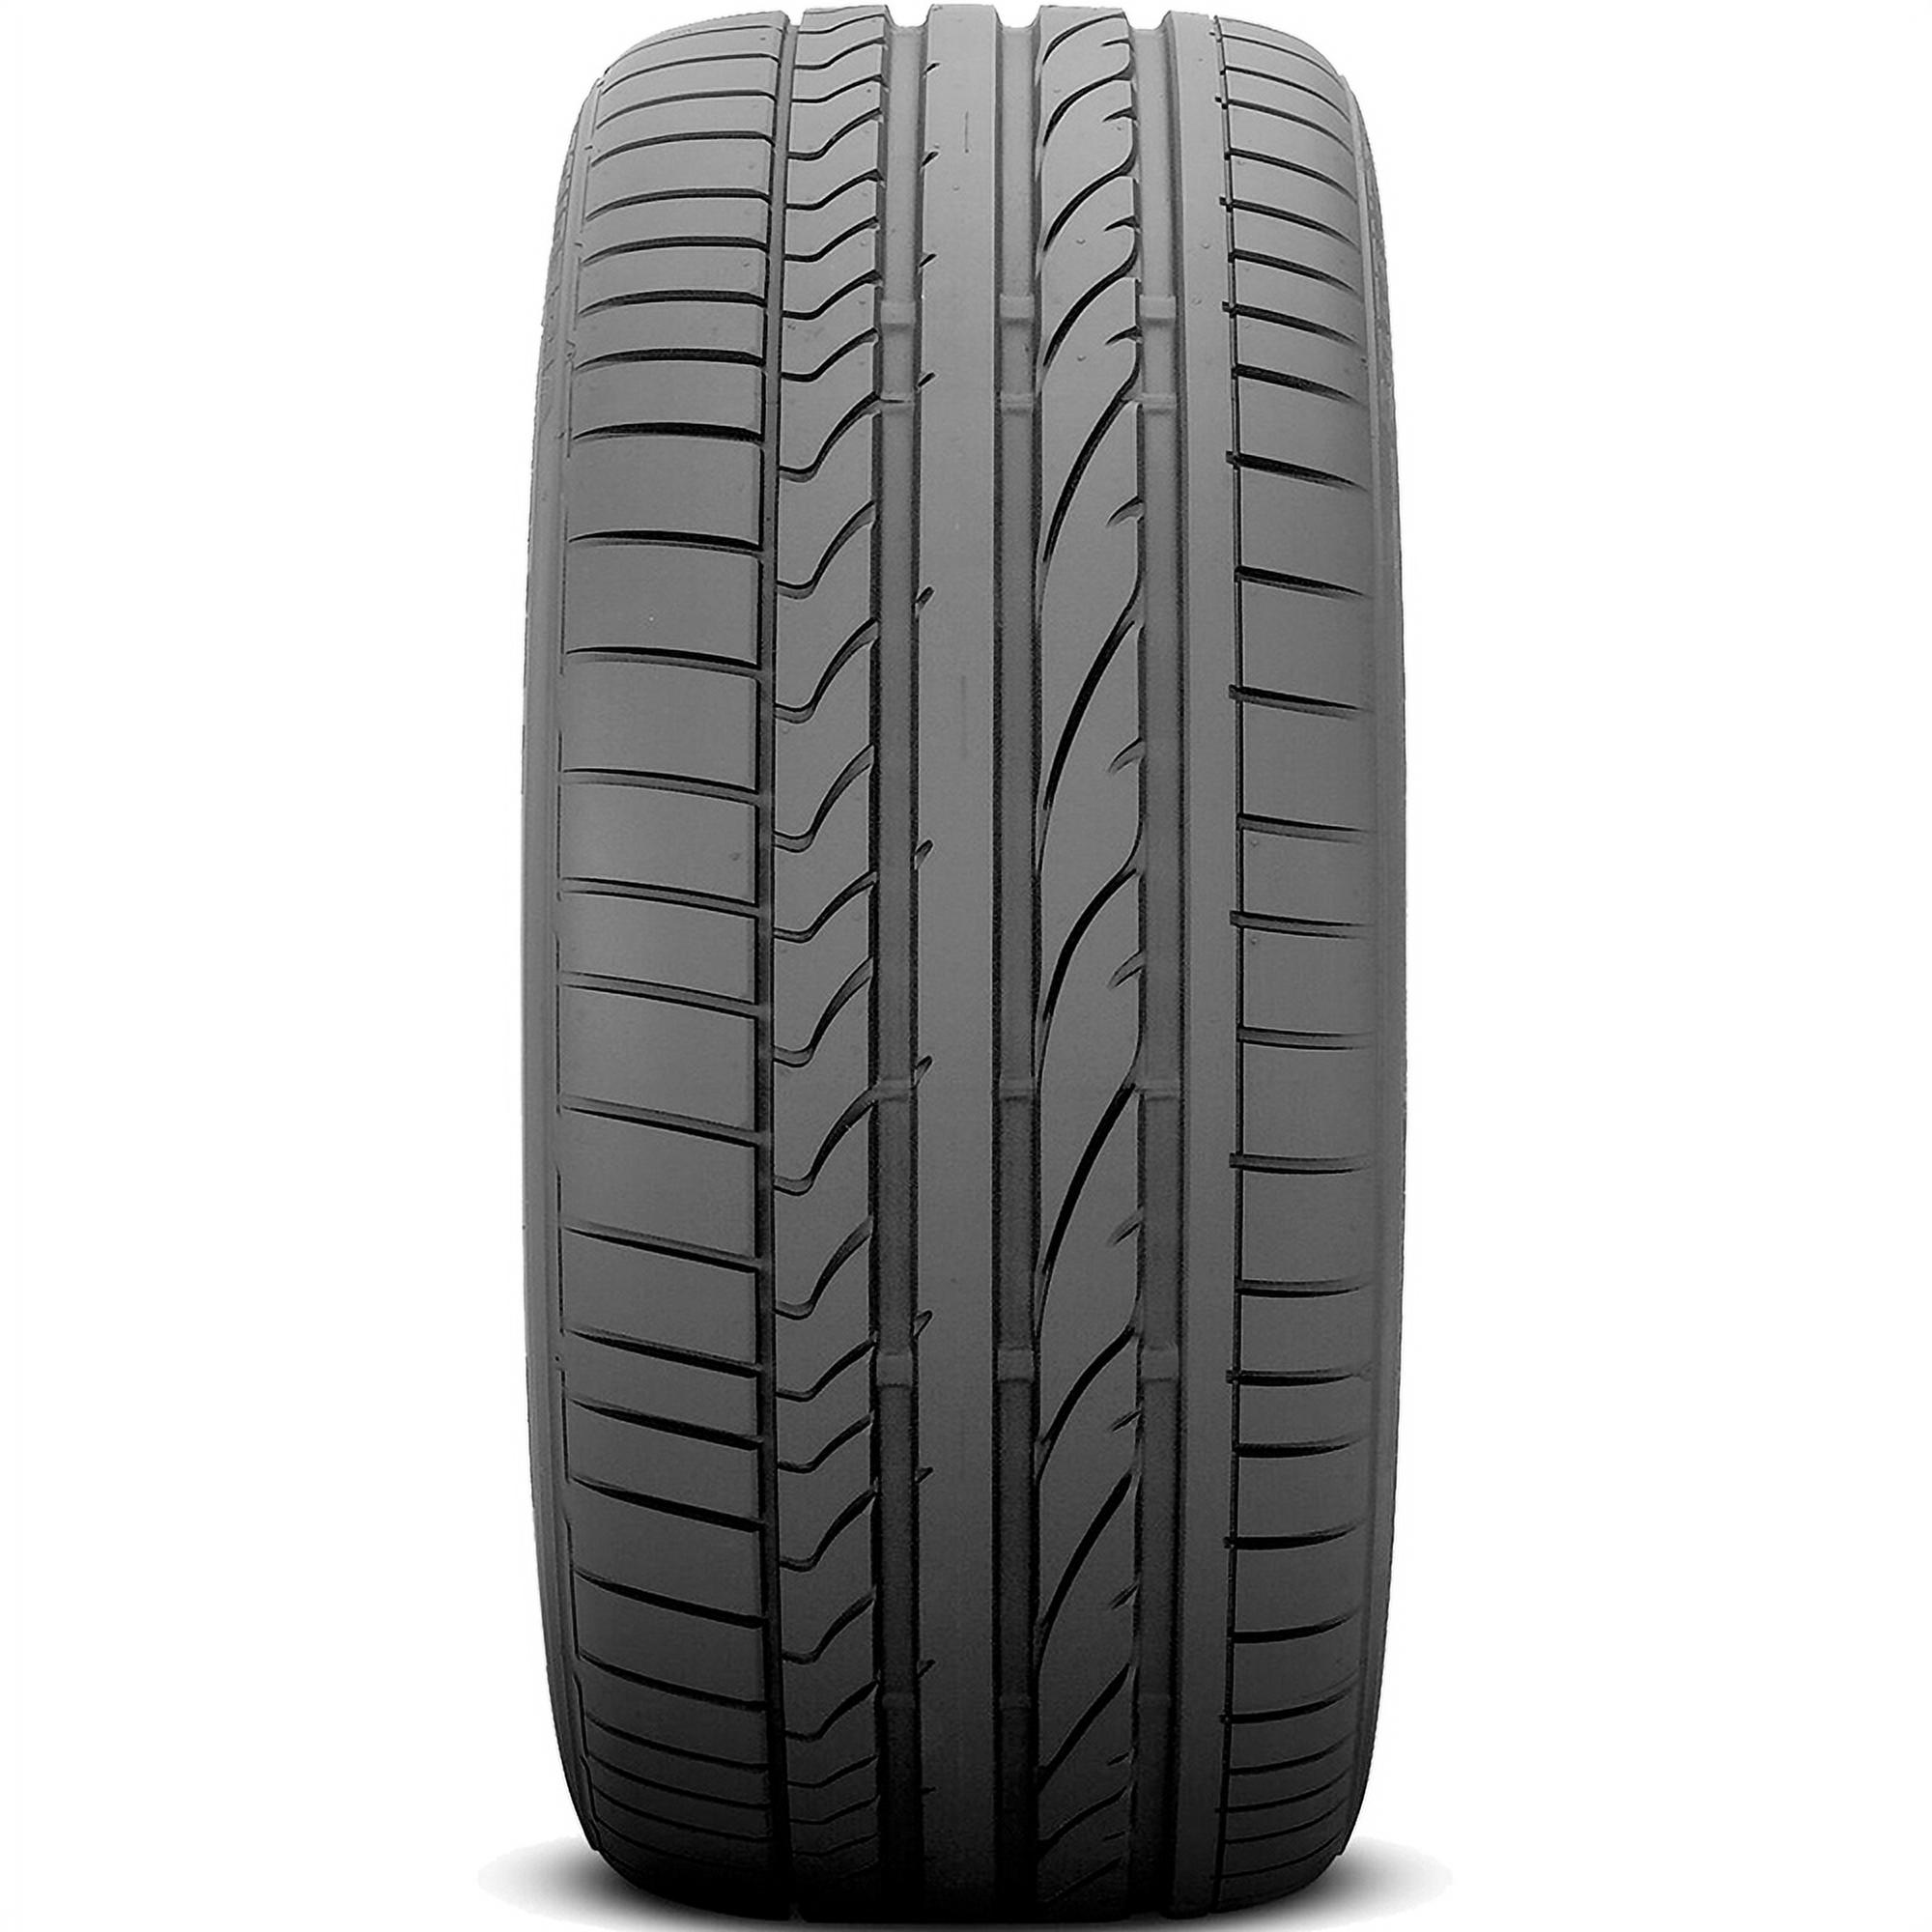 Bridgestone Potenza RE050A RFT 275/40R18 99W Performance Tire